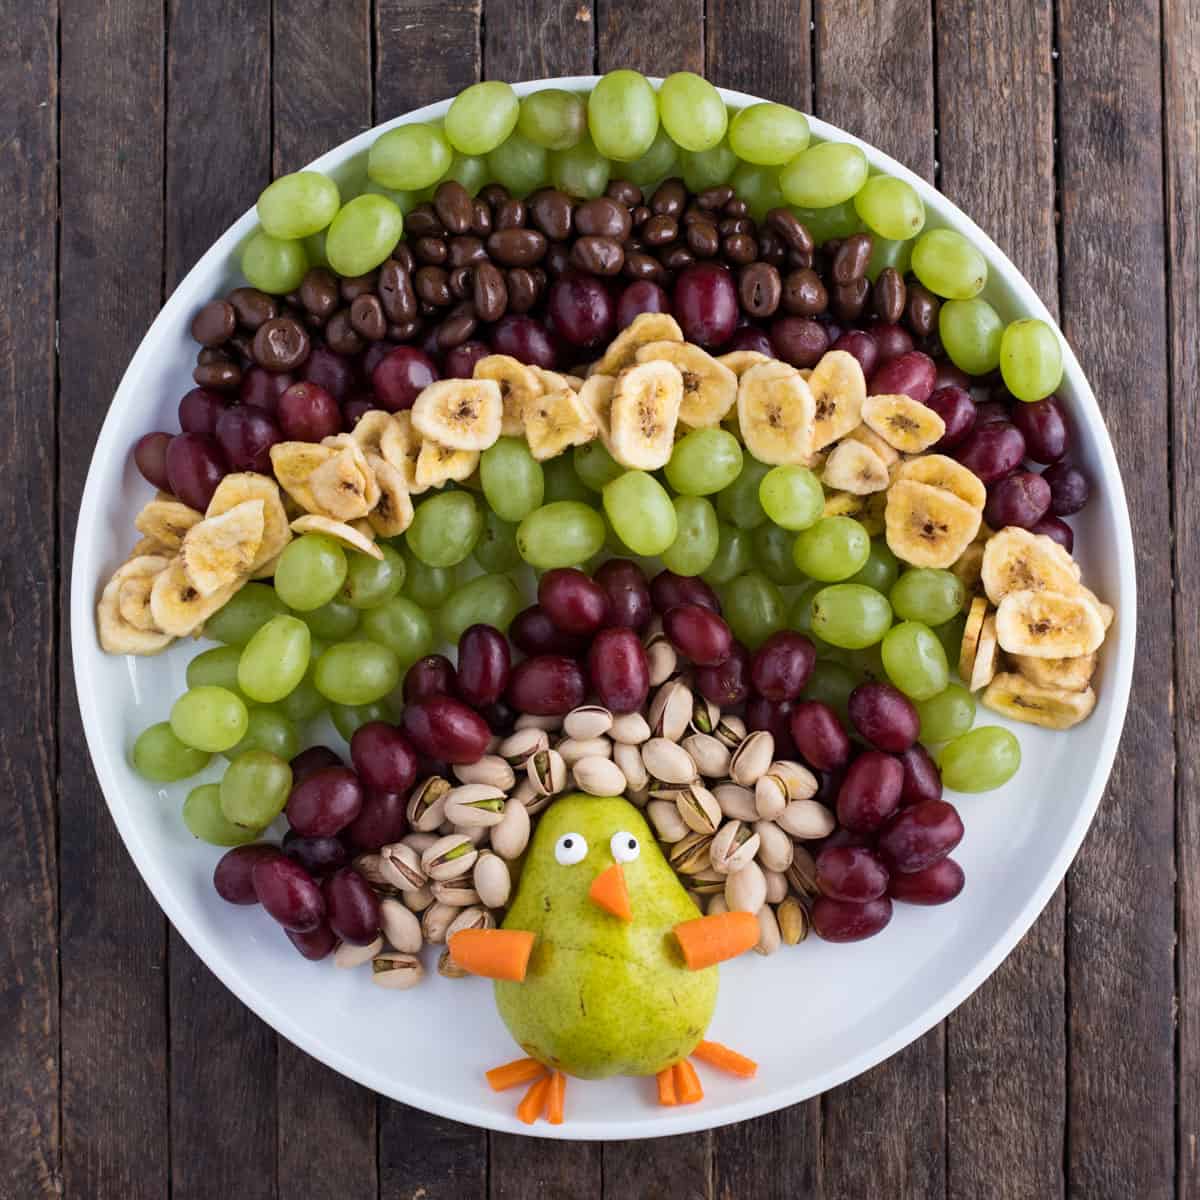 Turkey-Shaped Fruit Platter Food Decoration Idea For Thanksgiving CelebrationEasy Food Decoration Ideas